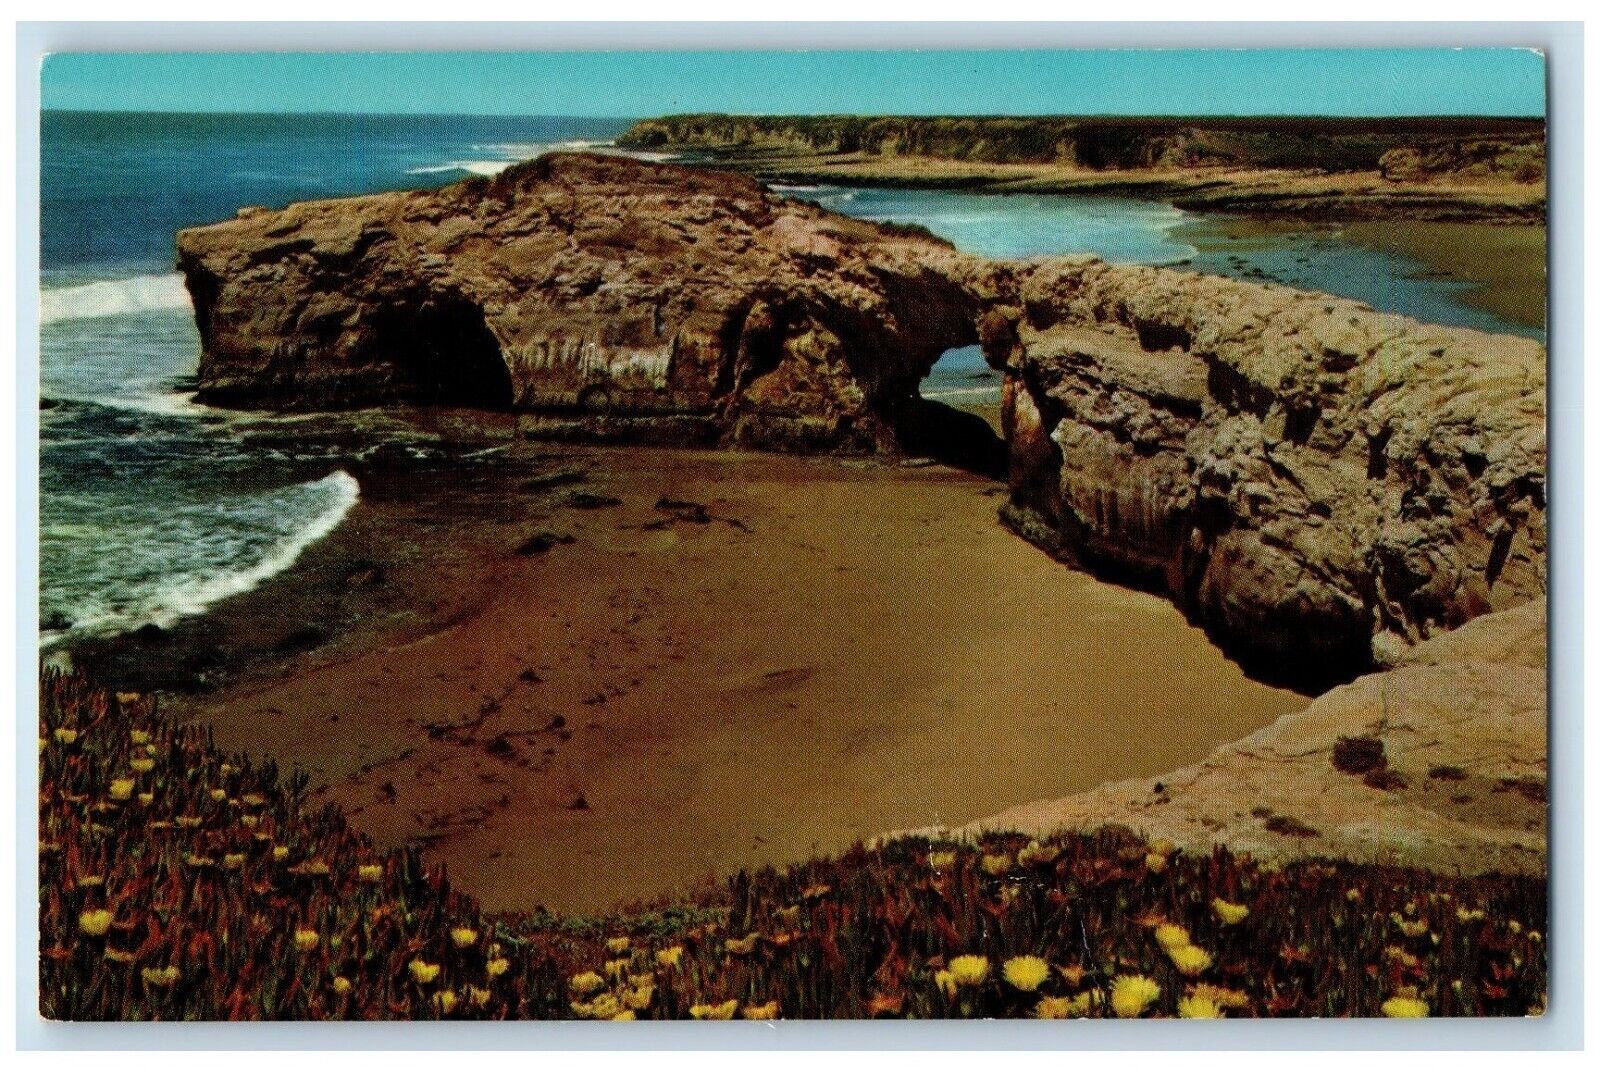 1967 National Bridge Miami Valley Dodge State Park Oregon Advertisement Postcard